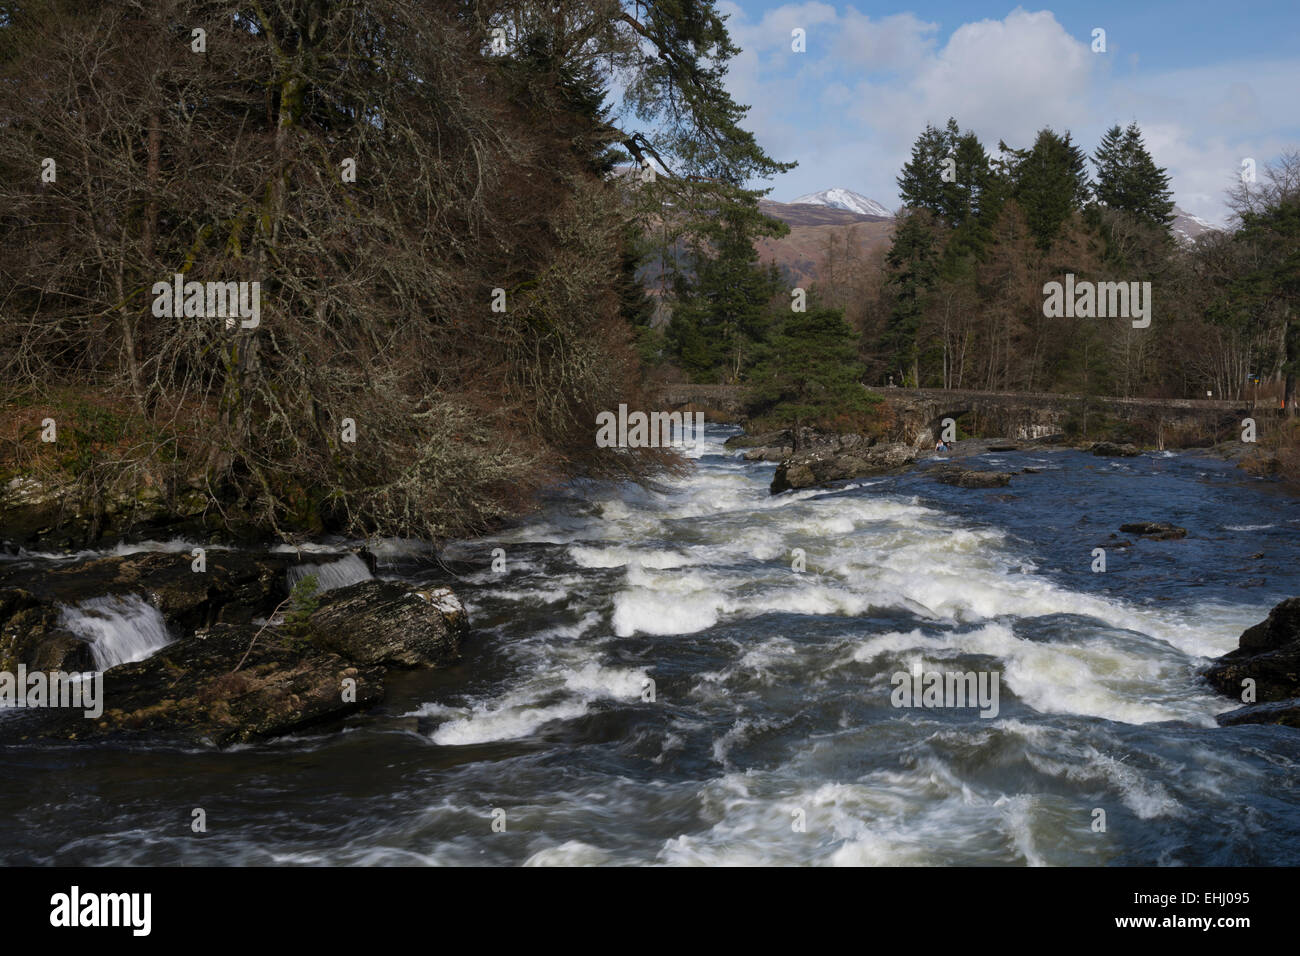 Falls of Dochart in the village of Killin, Scotland, UK Stock Photo